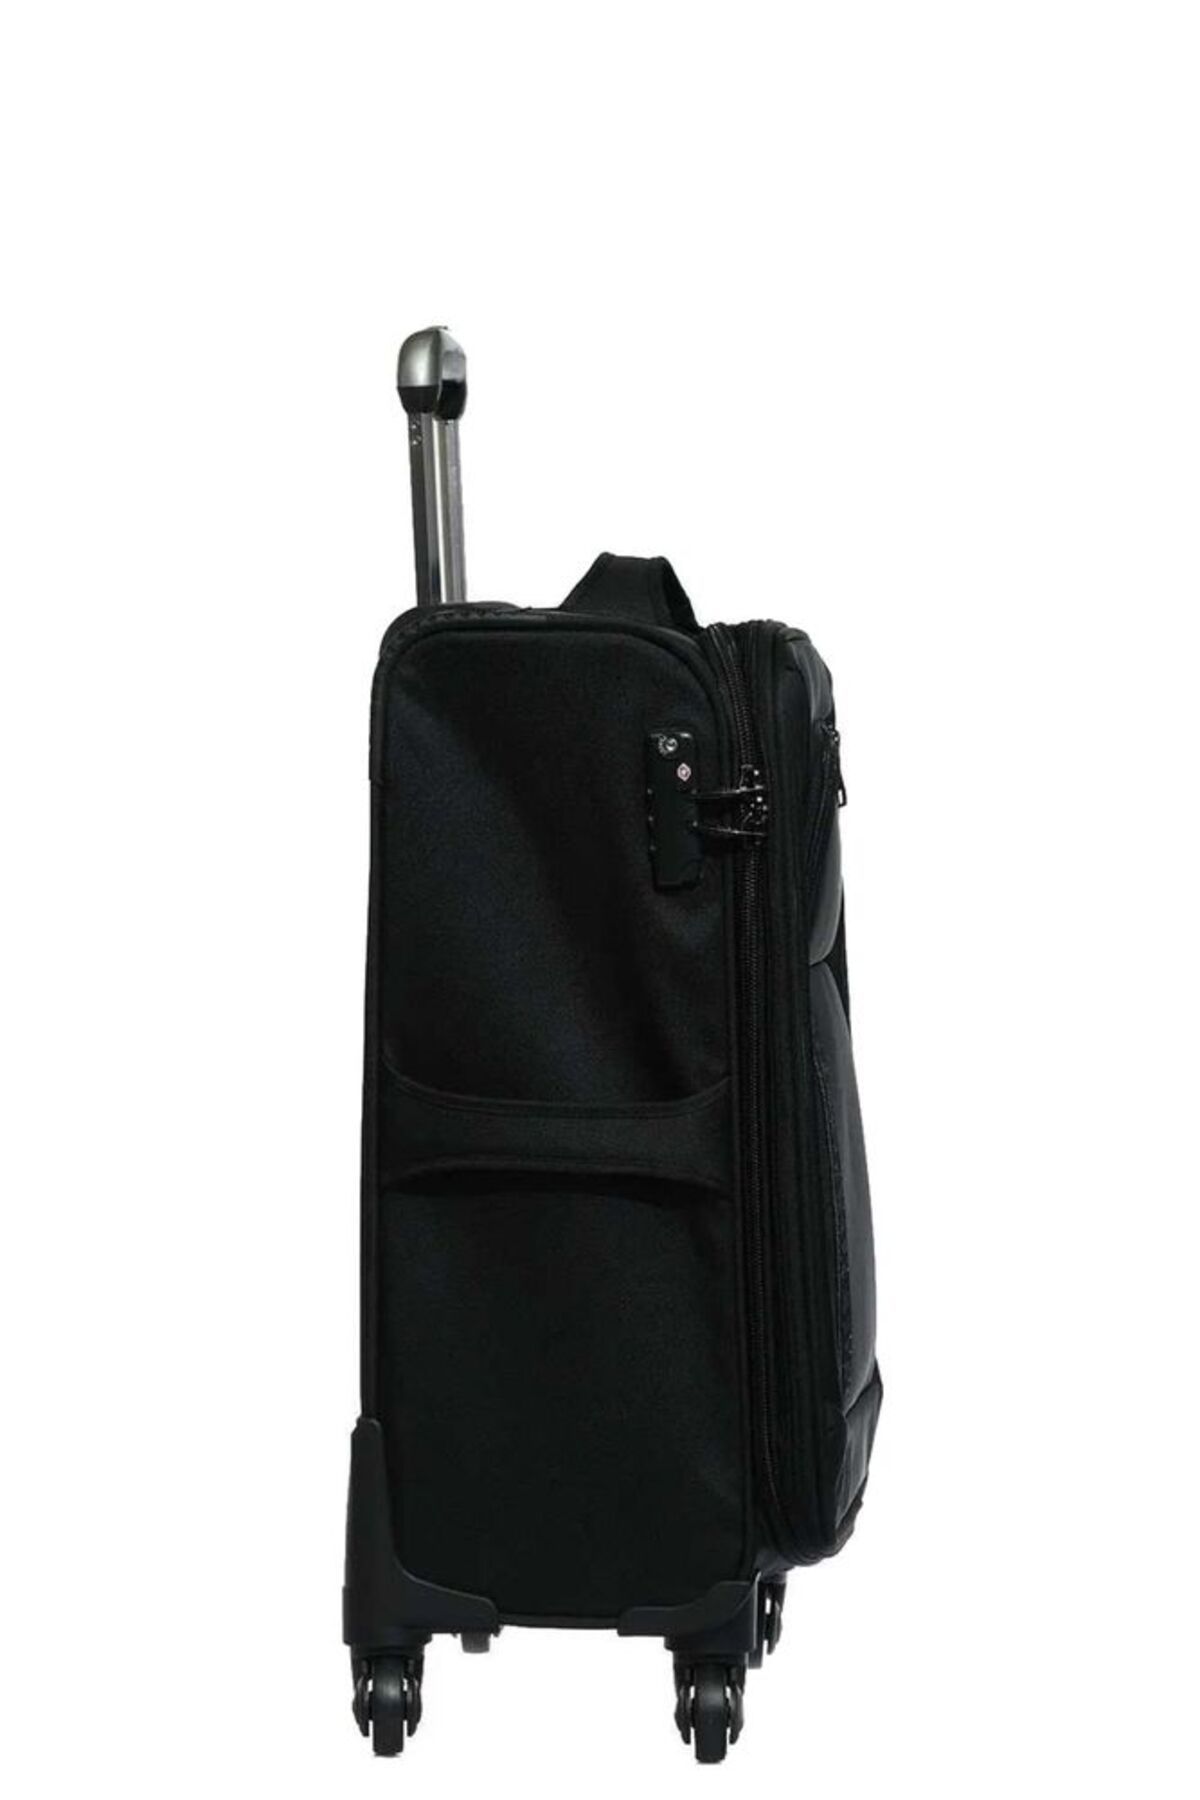 U.S. Polo Assn. پارچه مشکی چمدان یونیککس اندازه کابین یونیسکس plvlz22804c-k